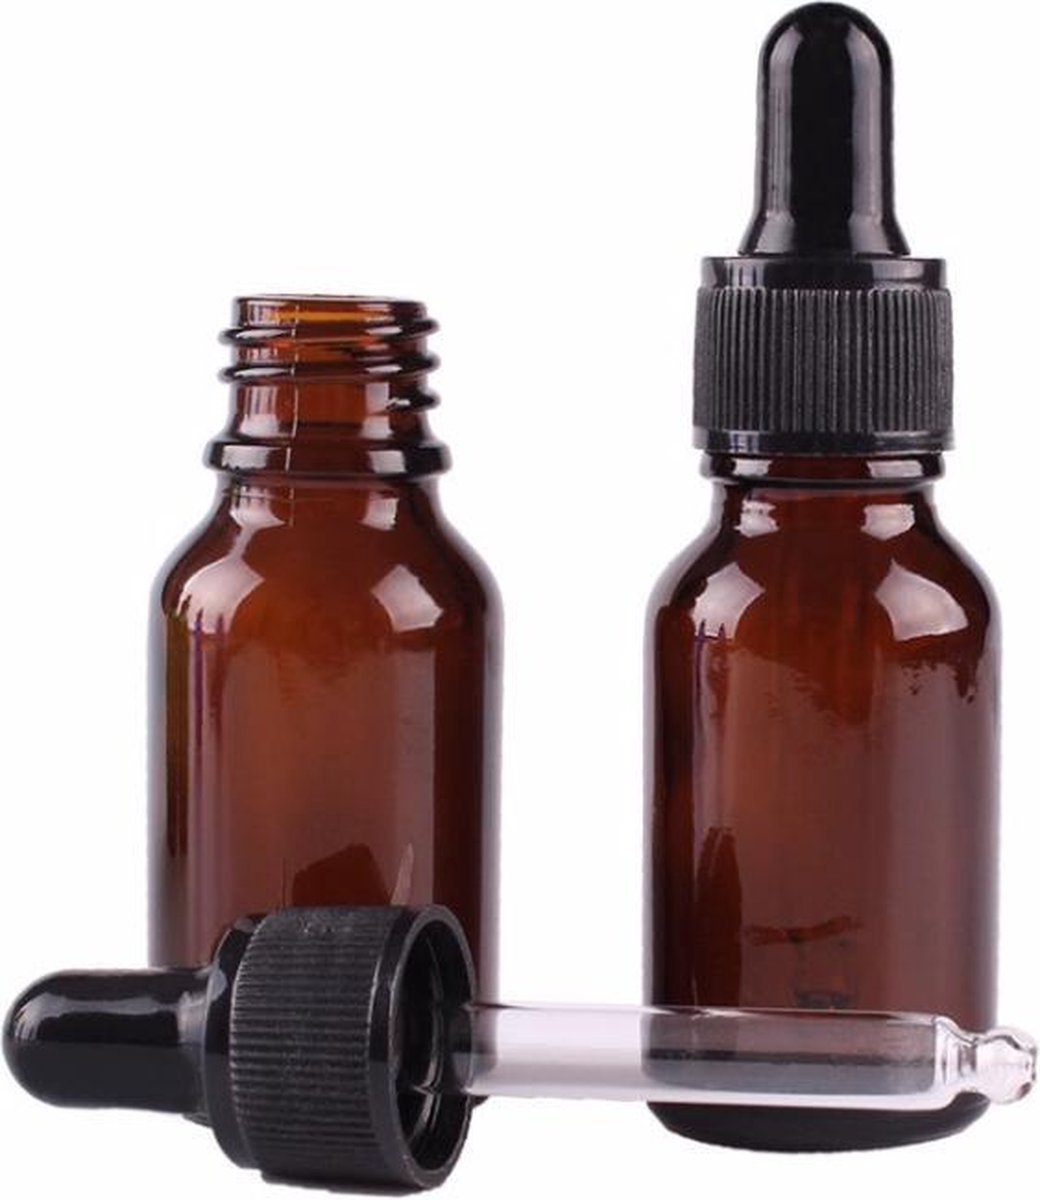 Amber (bruinglas) glazen pipetflesje - 15 ml - inclusief zwart pipet - aromatherapie